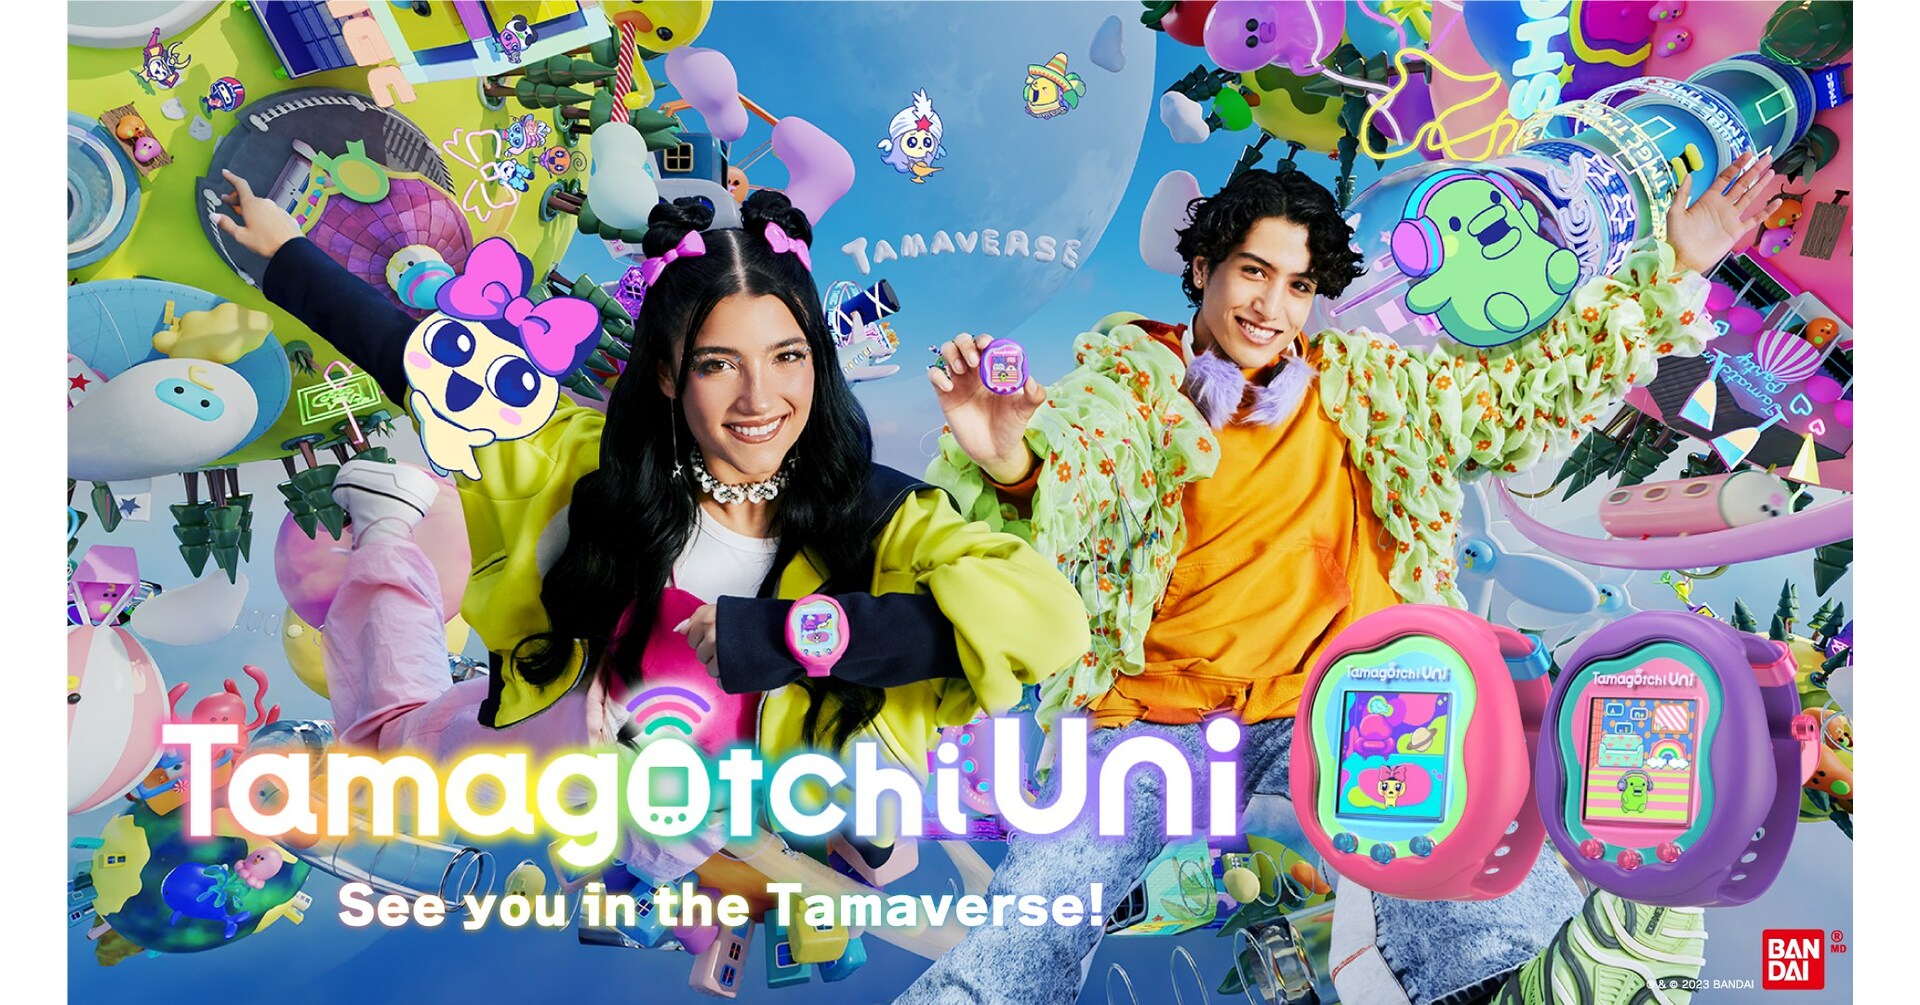 Tamagotchi Uni bands are now available!, News, Tamagotchi Uni